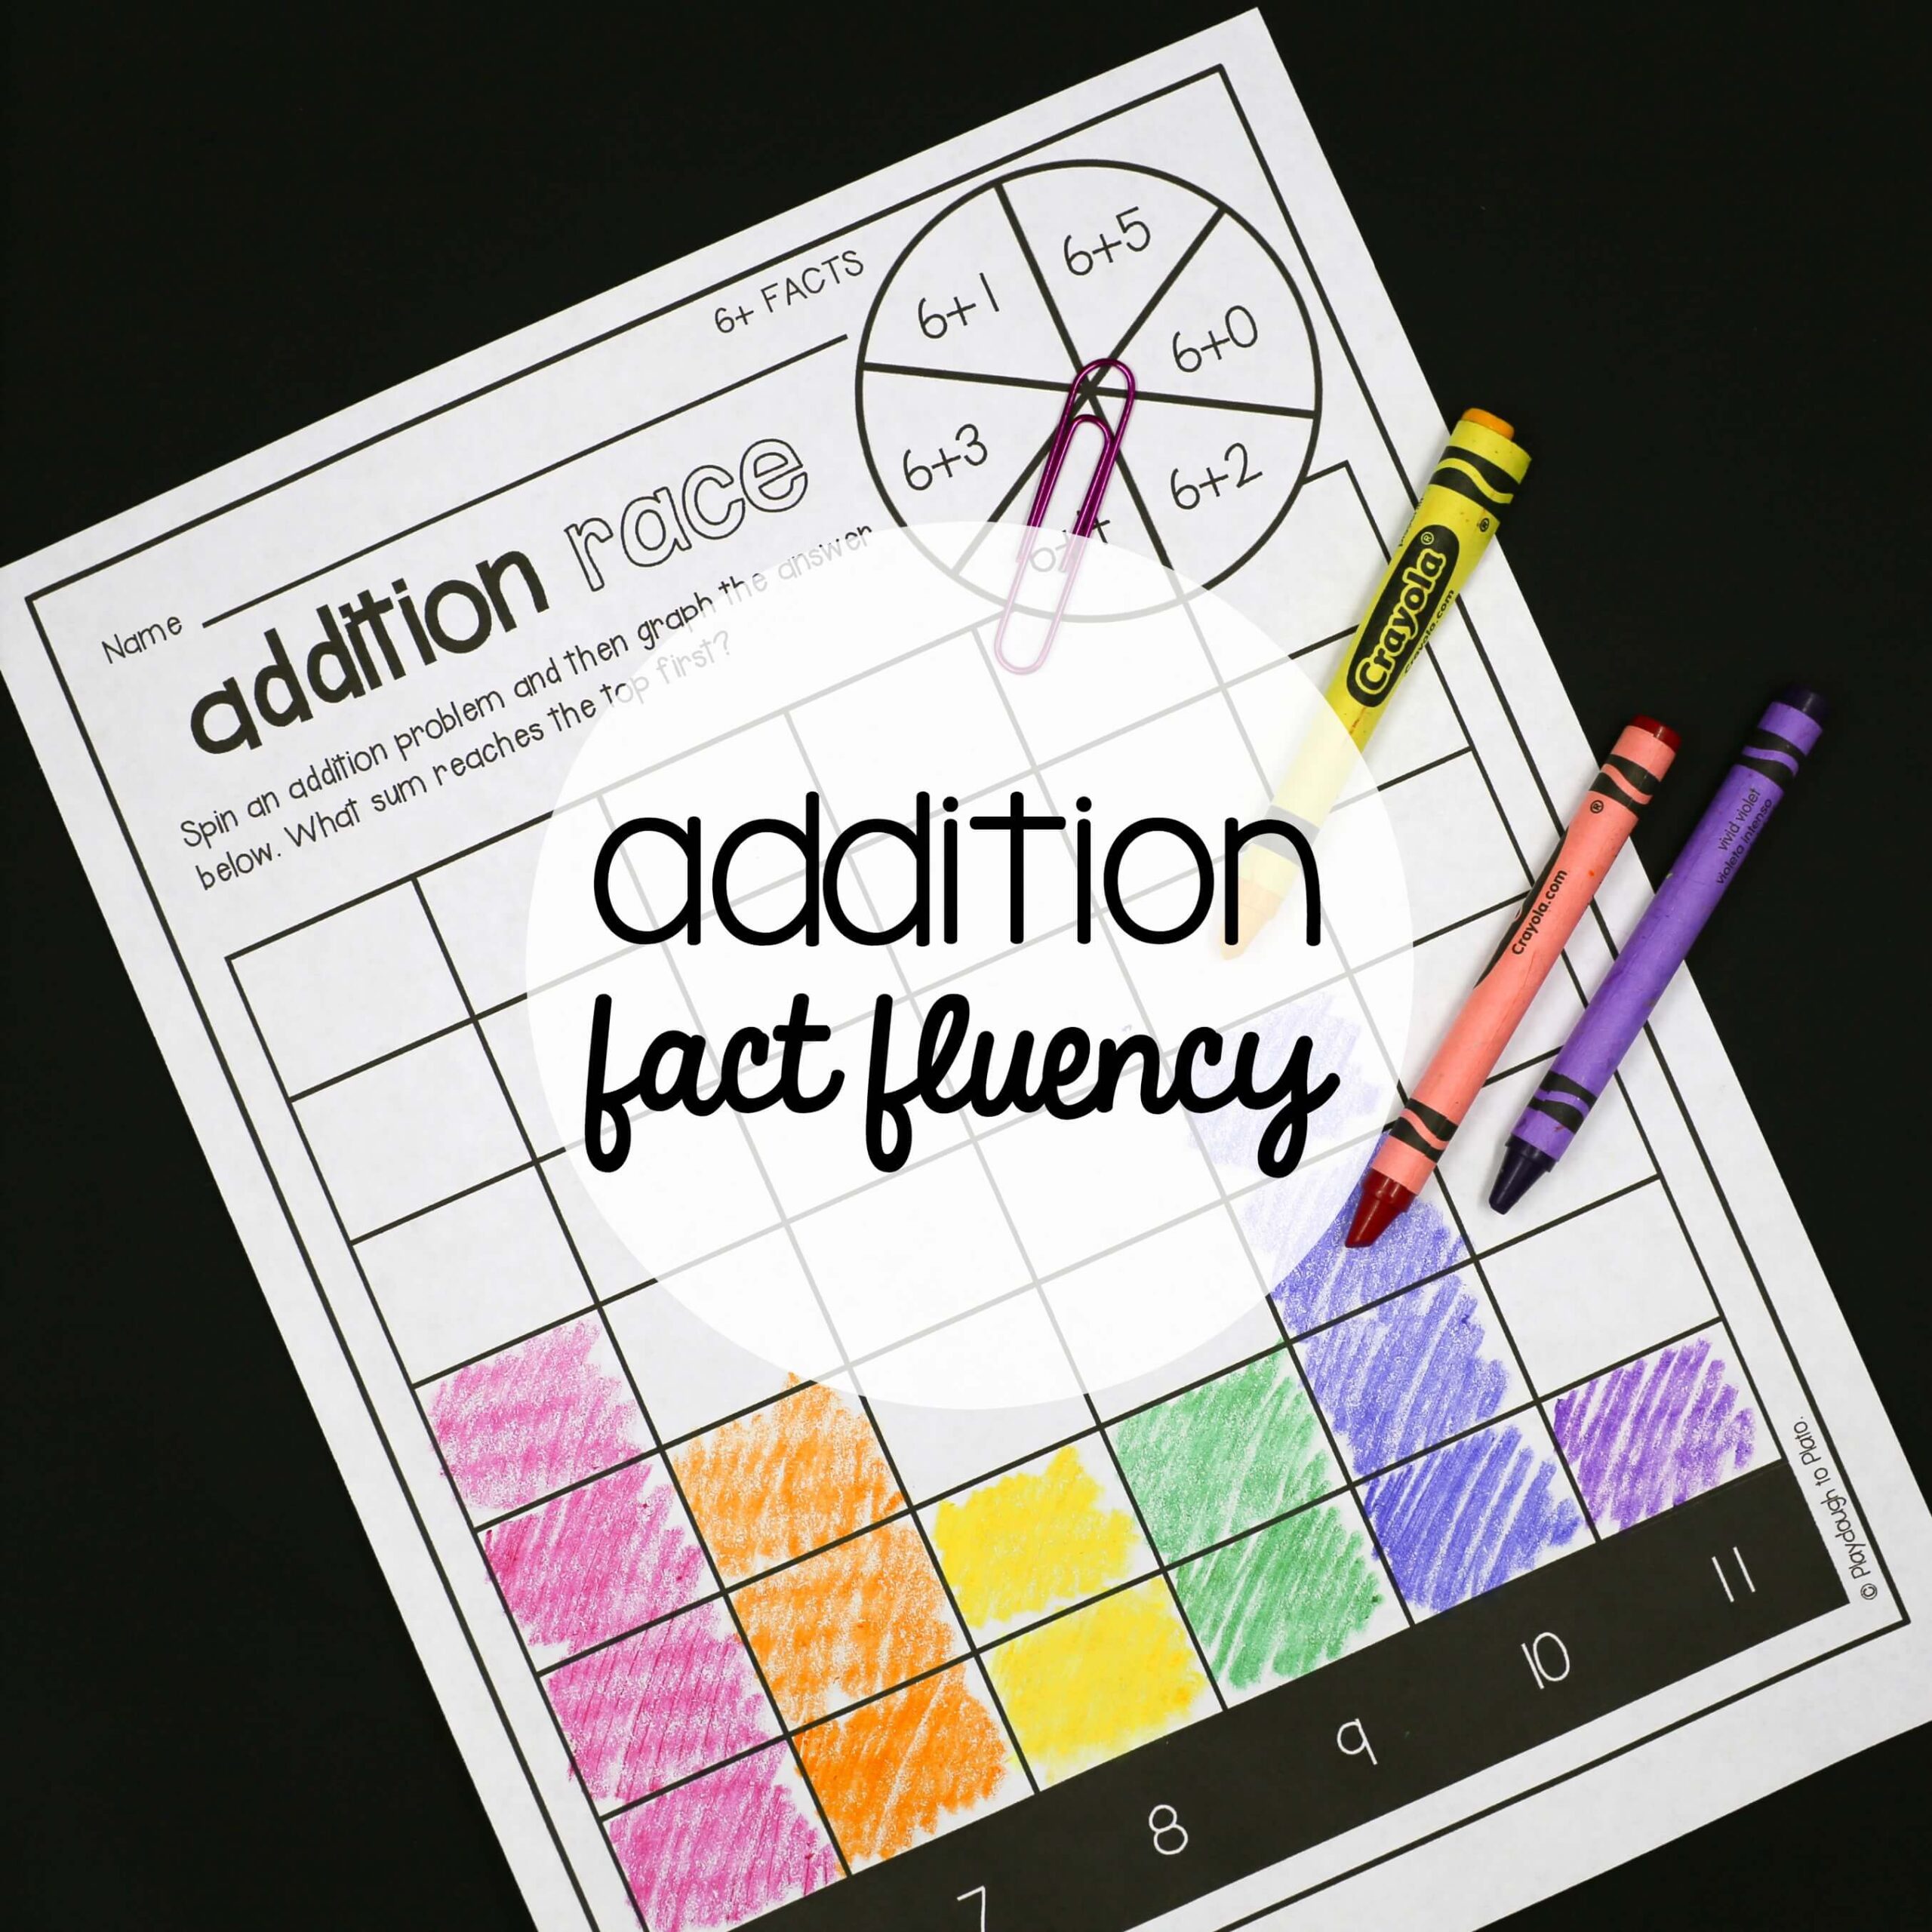 Addition Fact Fluency